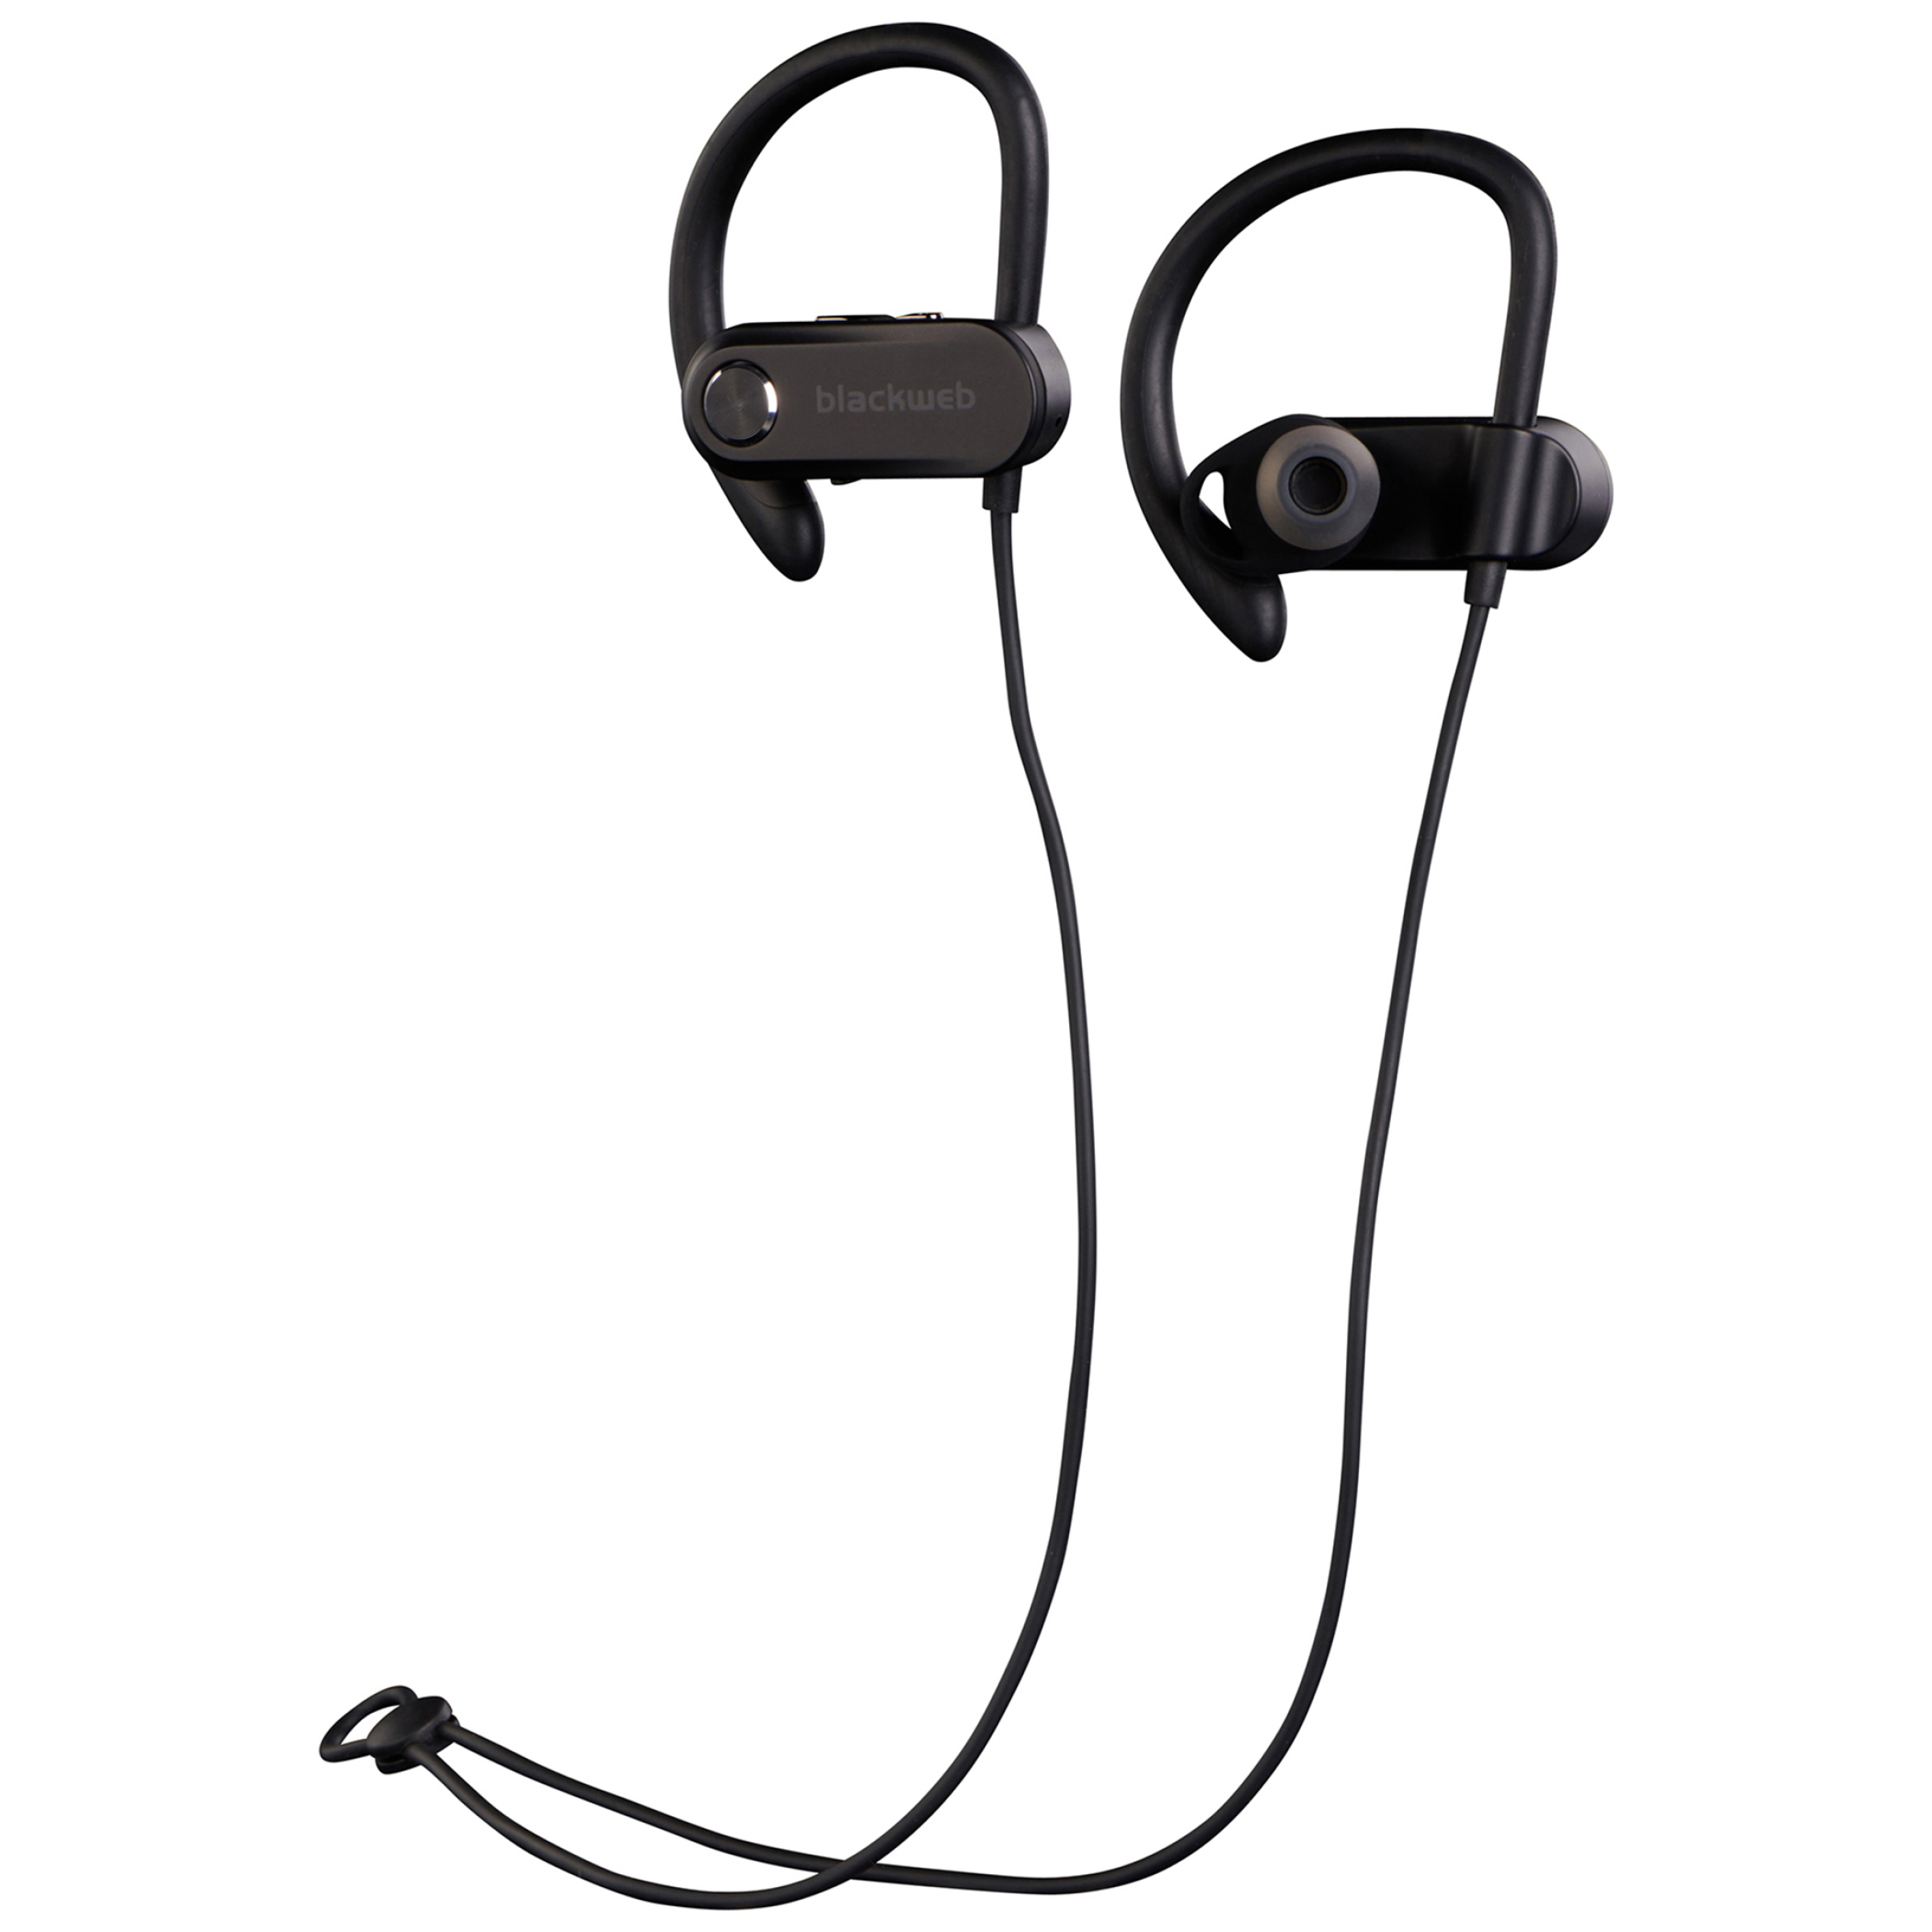 Blackweb Wireless Bluetooth Sport Earbuds, Black - image 6 of 6